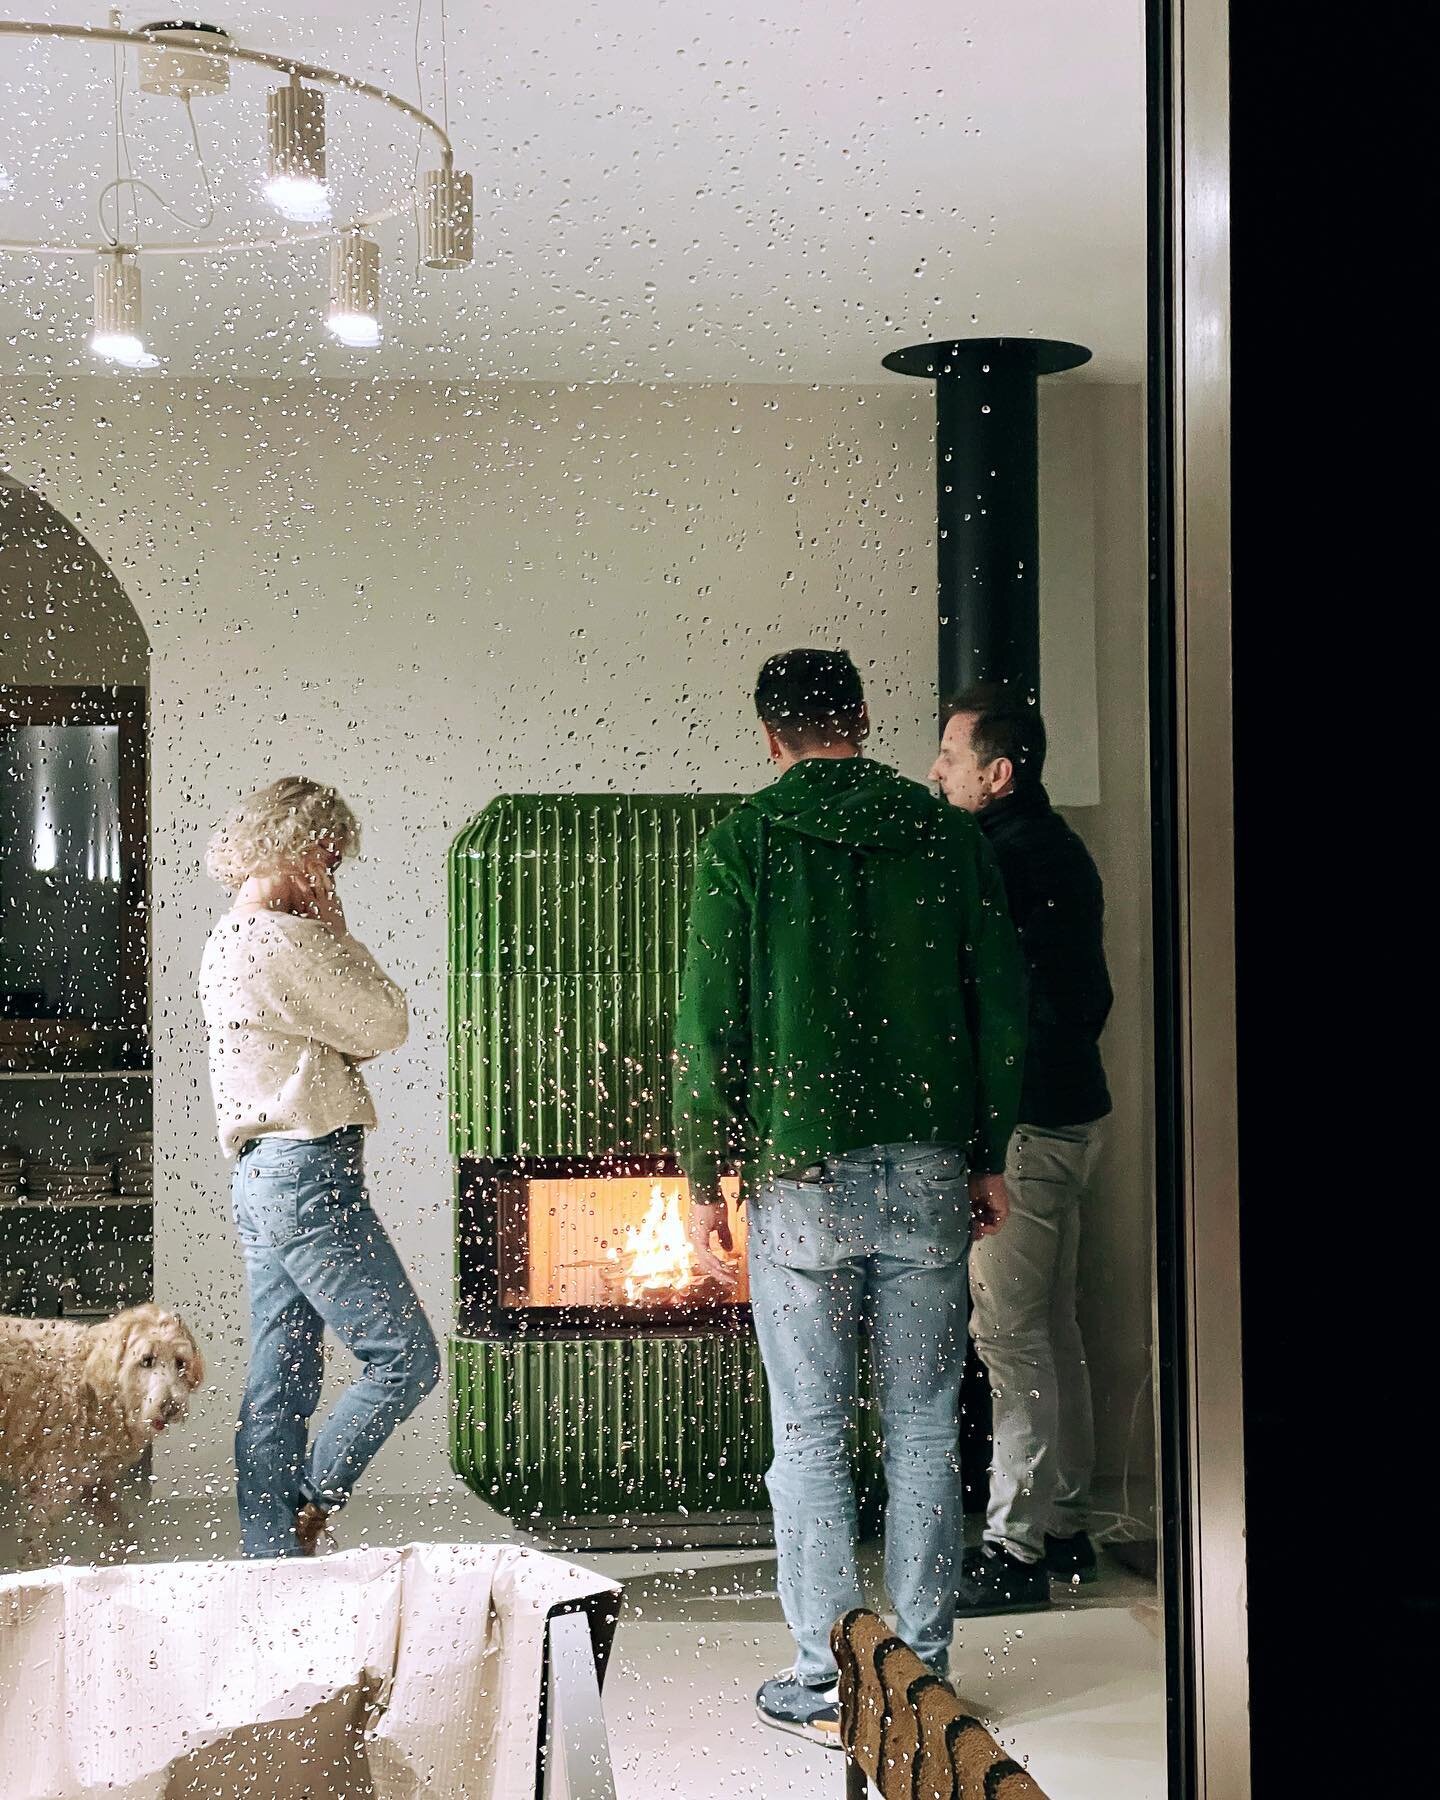 The first fire in a Relief 434 stove

#fireplace #tiledstove #ceramictiles #kachelofen #kamin #kaminbau #hafner #designfireplace #woodstove #interiordesign #homedesign #heating #homeinspiration #stovedesign